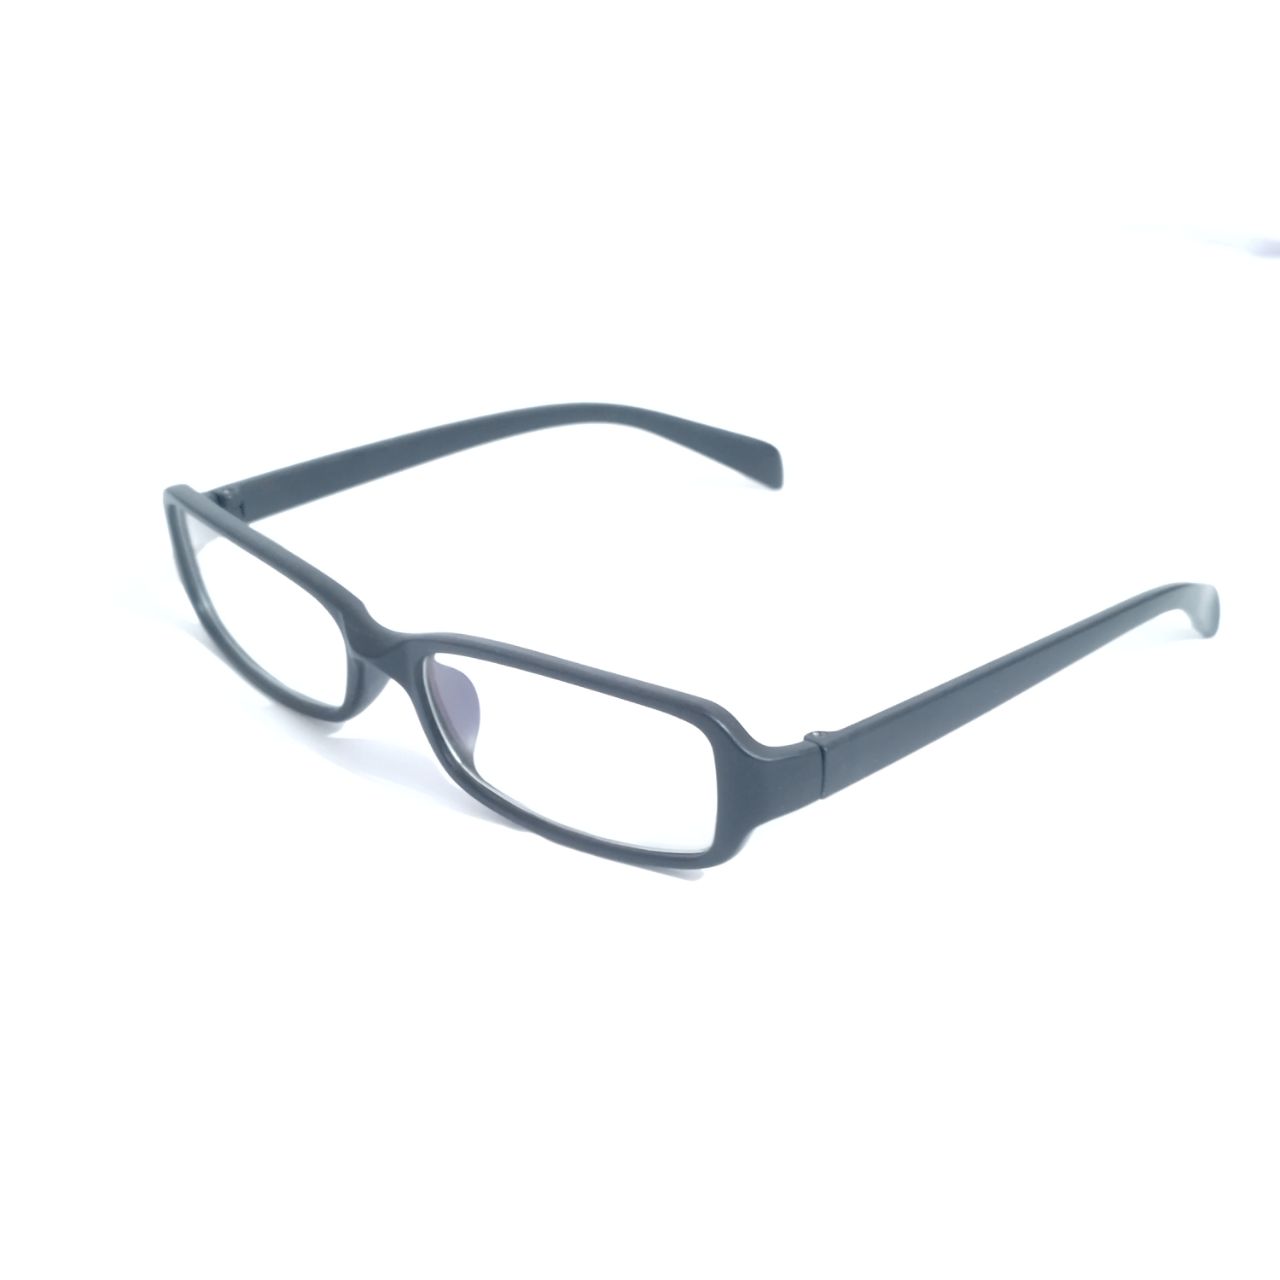 Black Computer Glasses with Anti Glare Coating